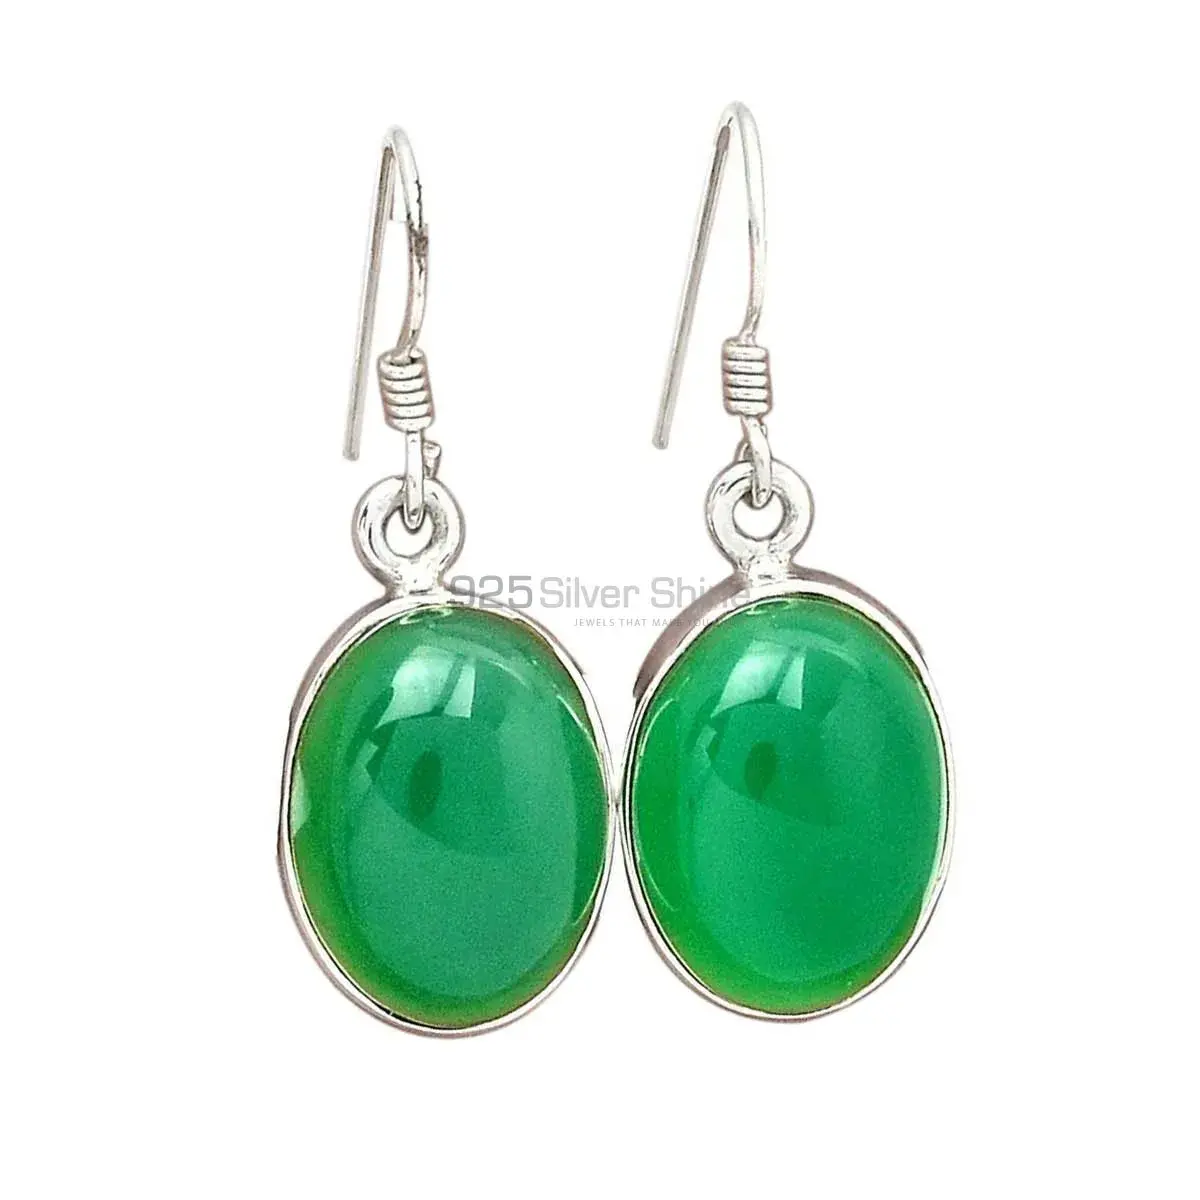 Top Quality 925 Sterling Silver Handmade Earrings In Green Onyx Gemstone Jewelry 925SE2222